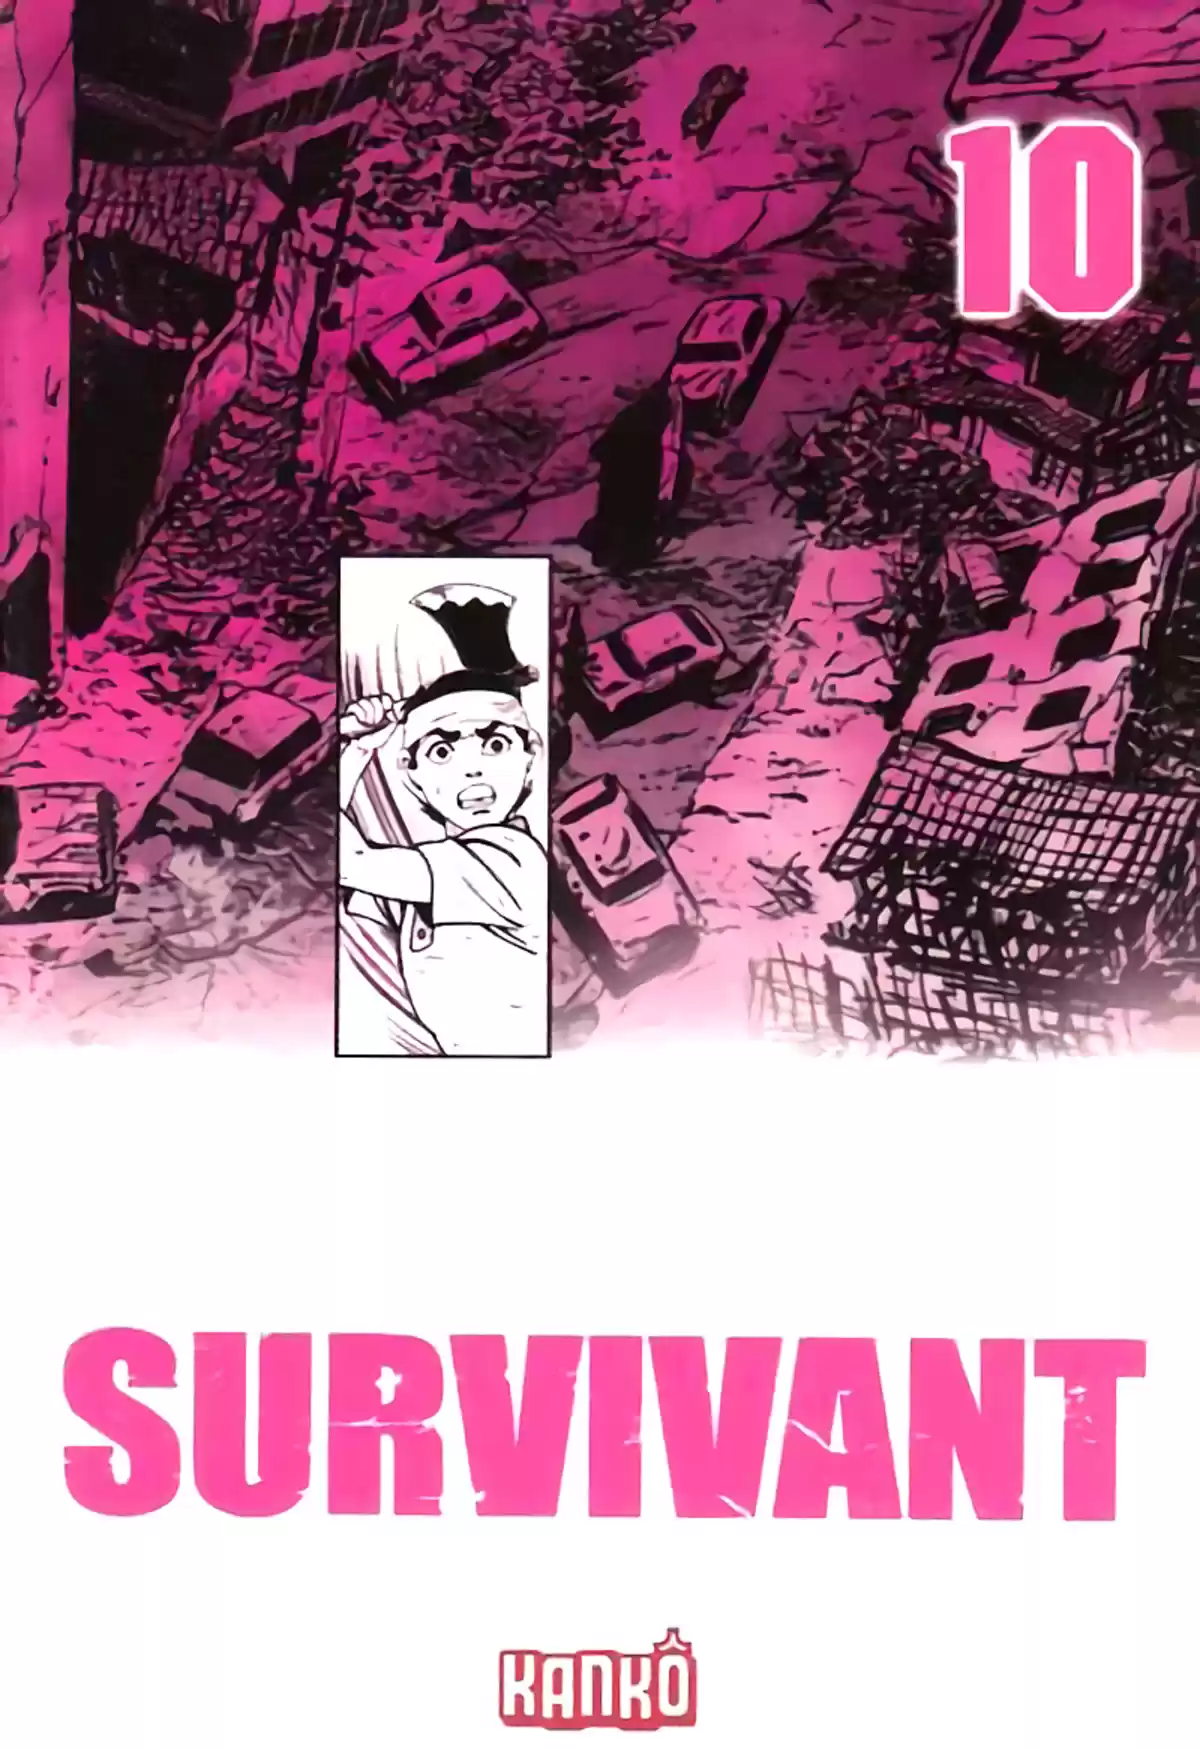 Survivant (Saito Takao) Volume 10 page 1